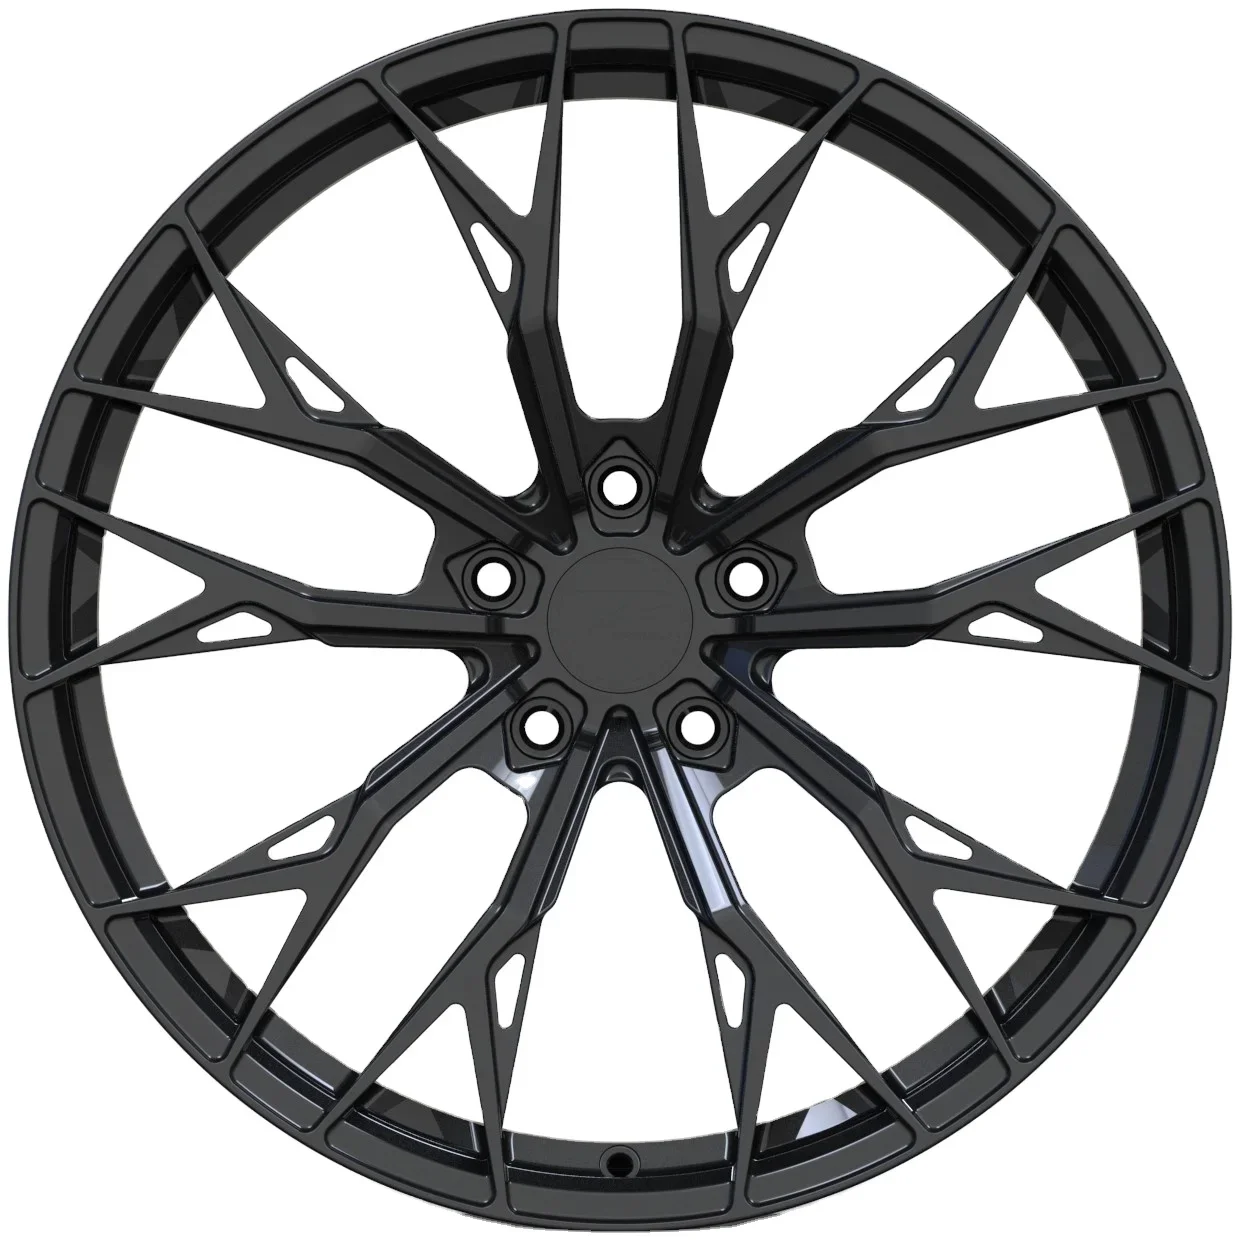 

Wheelux, моноблок, несколько спиц, 5x112, черный матовый кованый колесо для легкового автомобиля BMW m3 m5 f10 m6 e61 e92 e93 e39 e46 e60